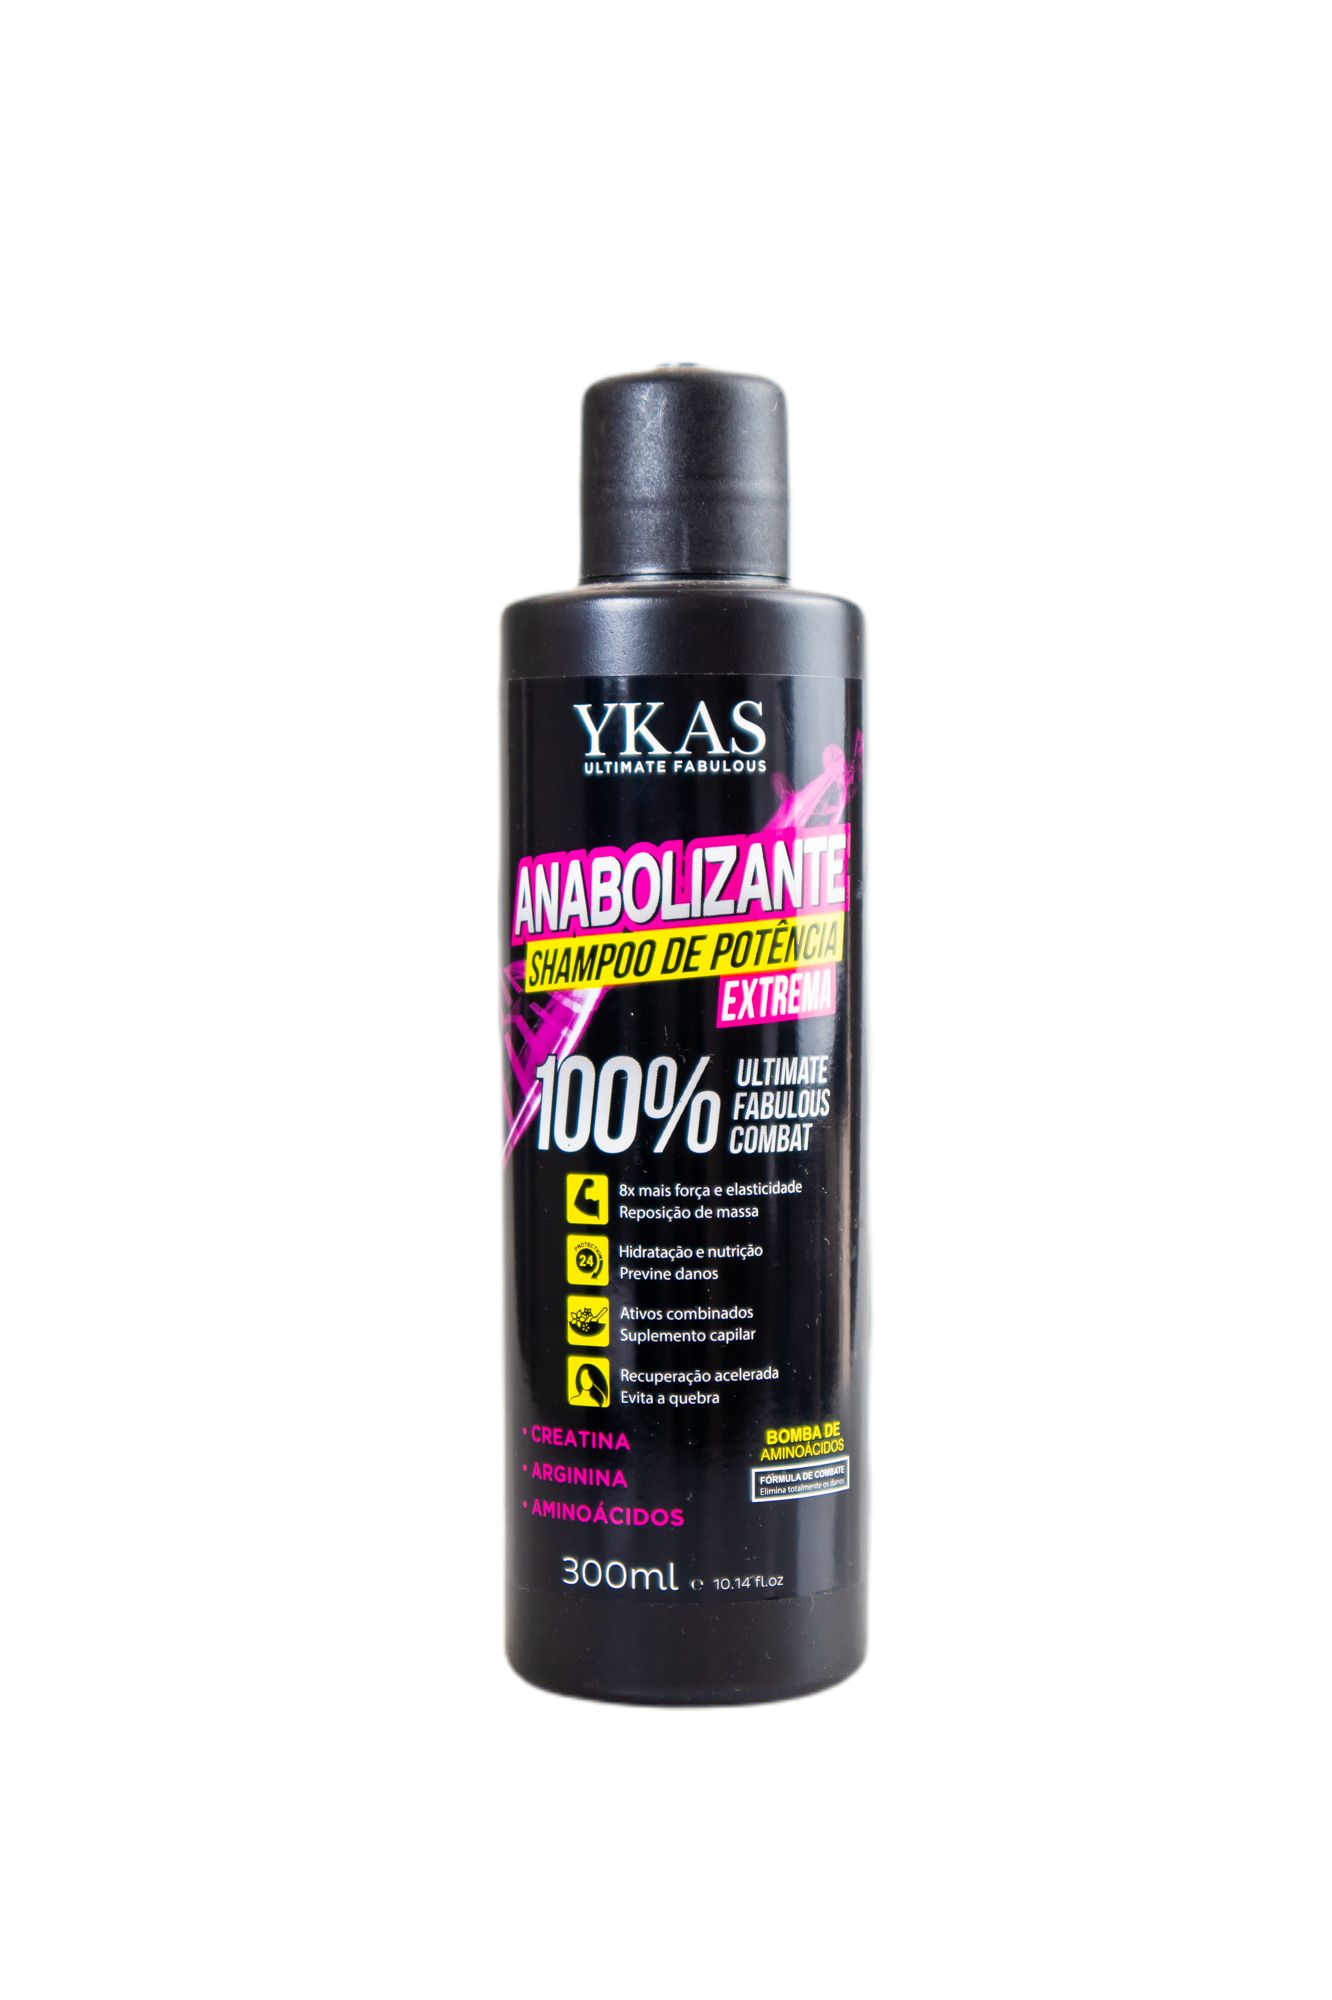 Ykas Brazilian Hair Treatment Ultimate Fabulous Combat Hair Anabolic Shampoo Extreme Power 300ml - Ykas